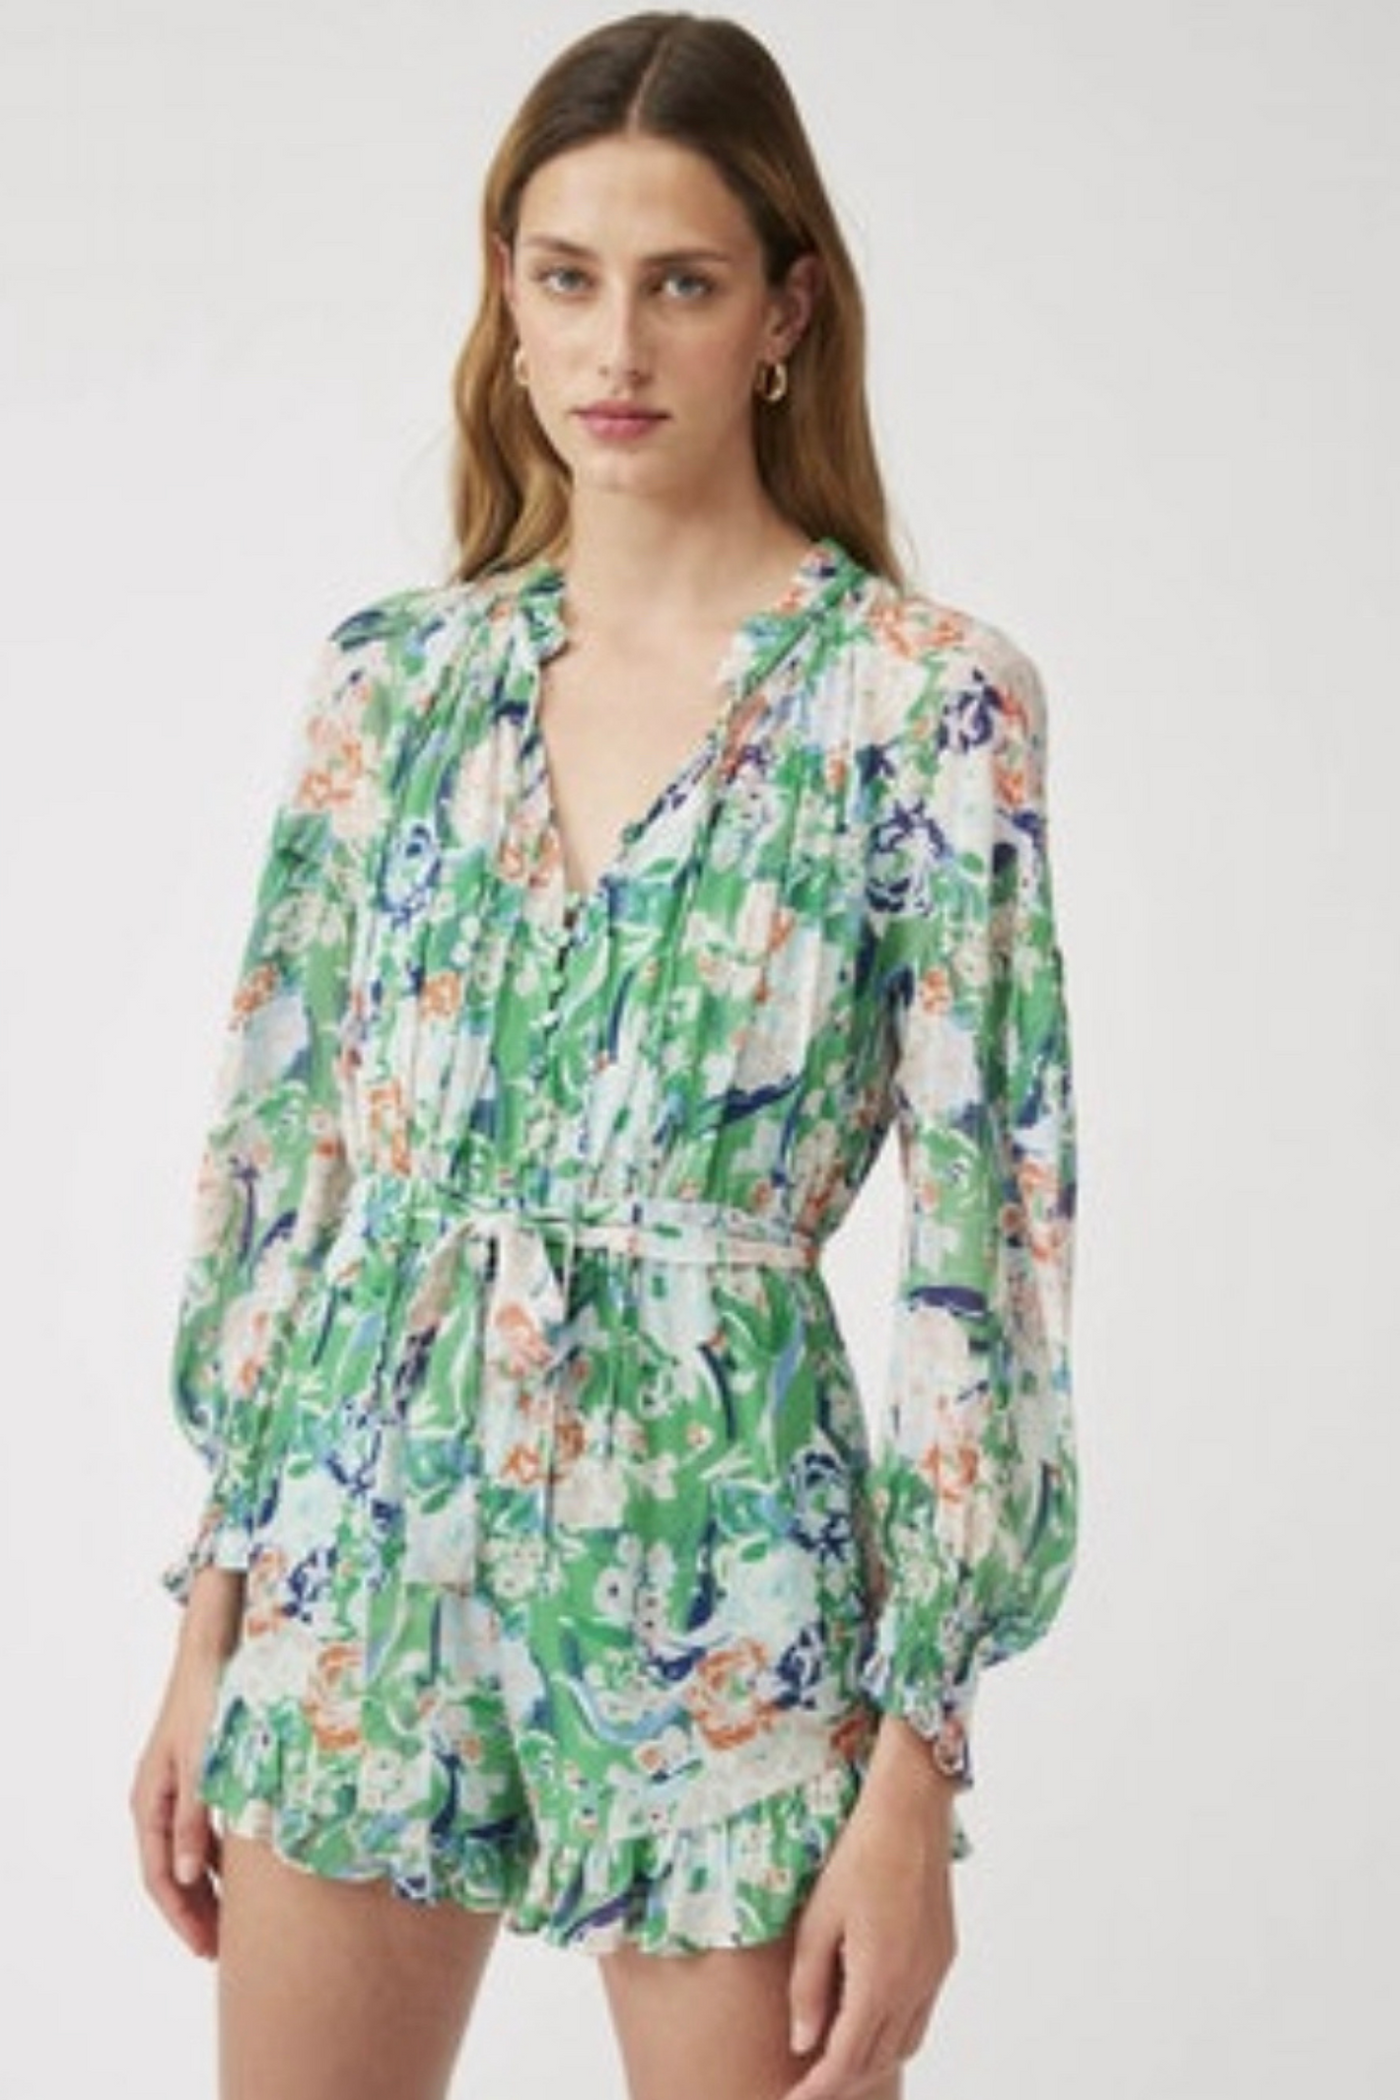 Suncoo Izy Green Floral Playsuit | Jezabel Boutique